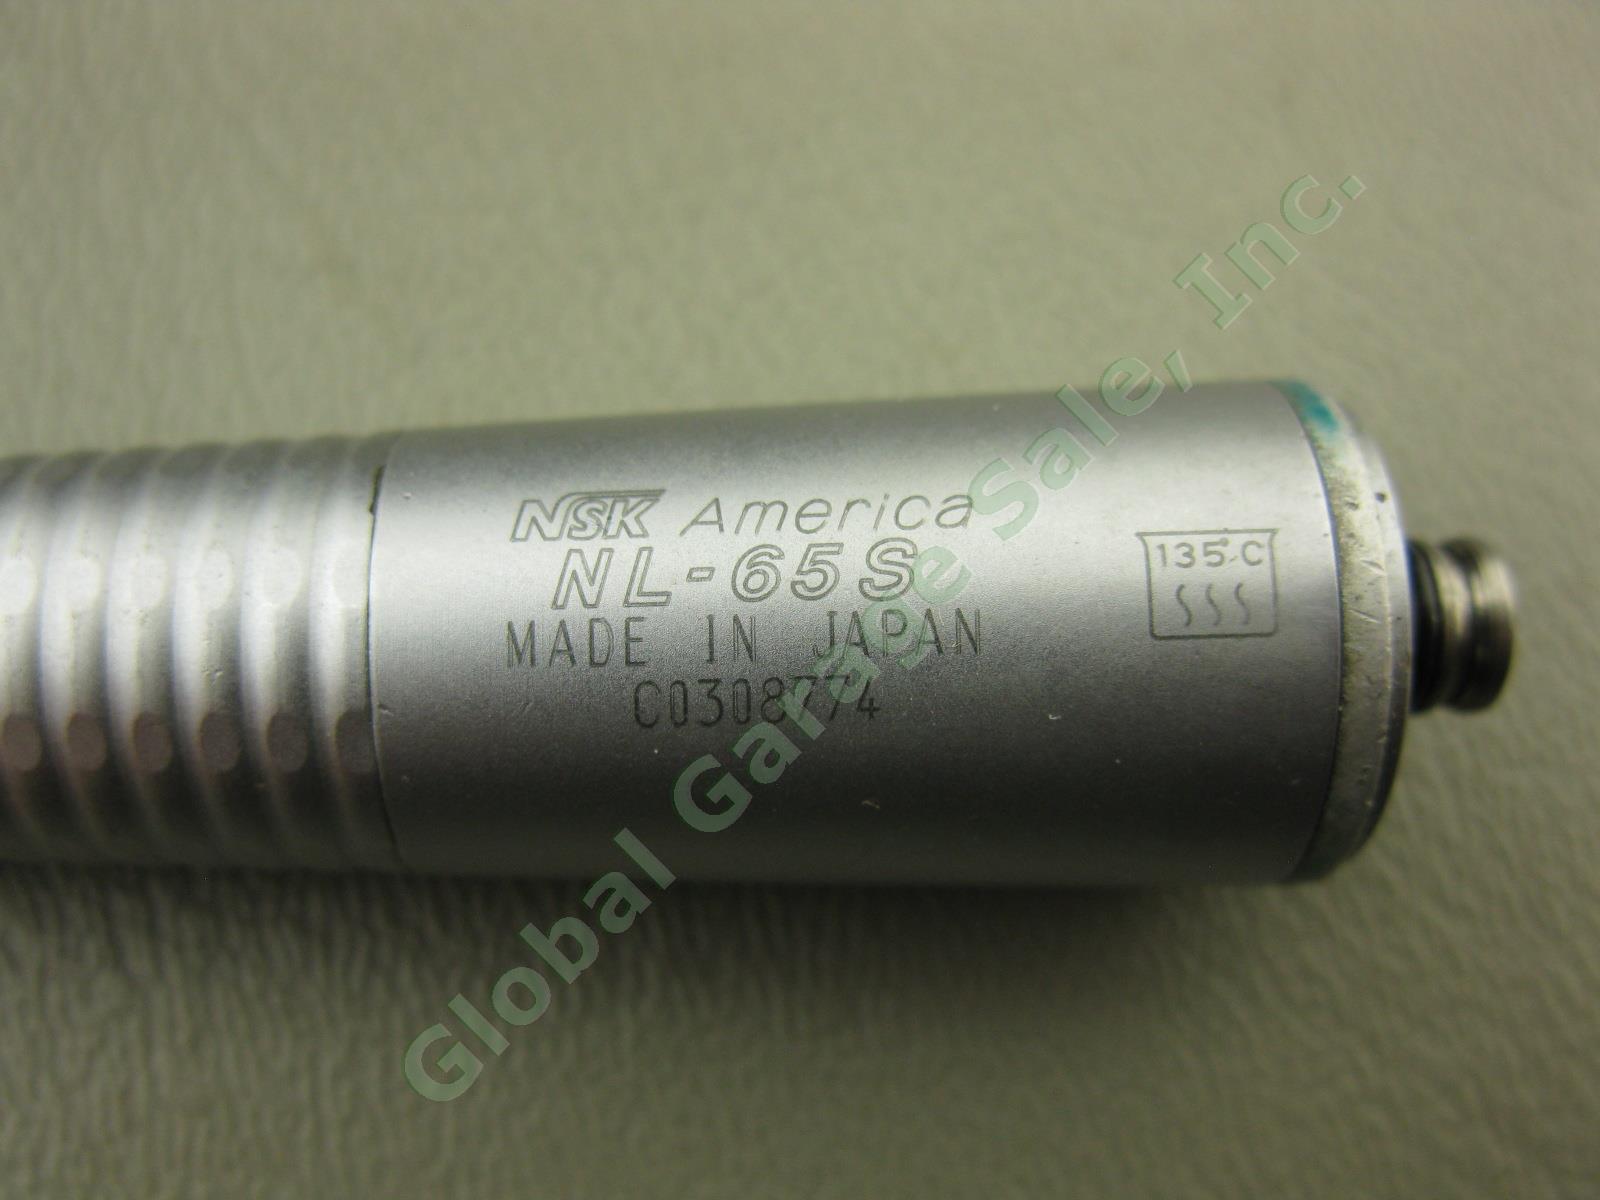 2 NSK High Speed Fiber Optic Dental Handpieces +4-Hole Coupler Connector Adapter 4